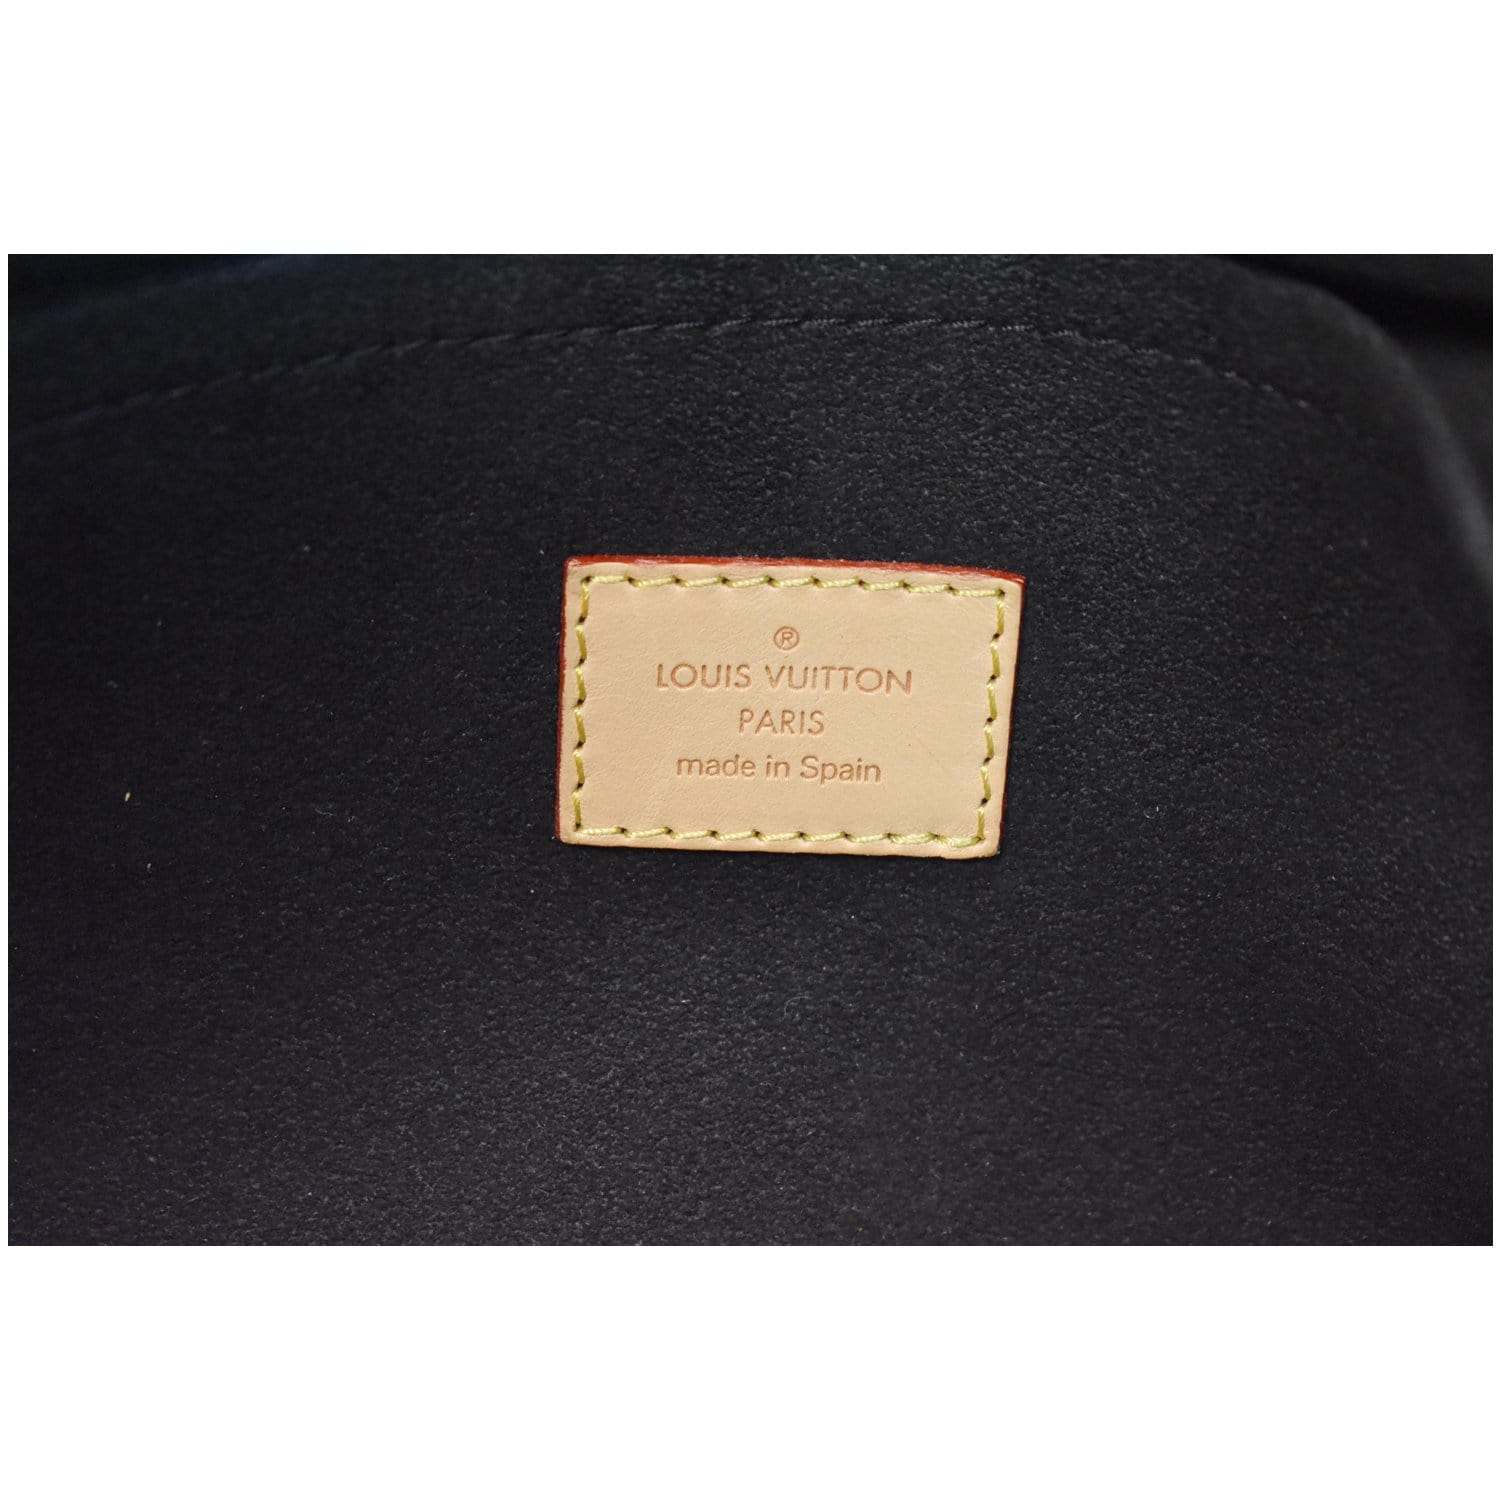 HELP!!Looking for Louis Vuitton Irene bag in black